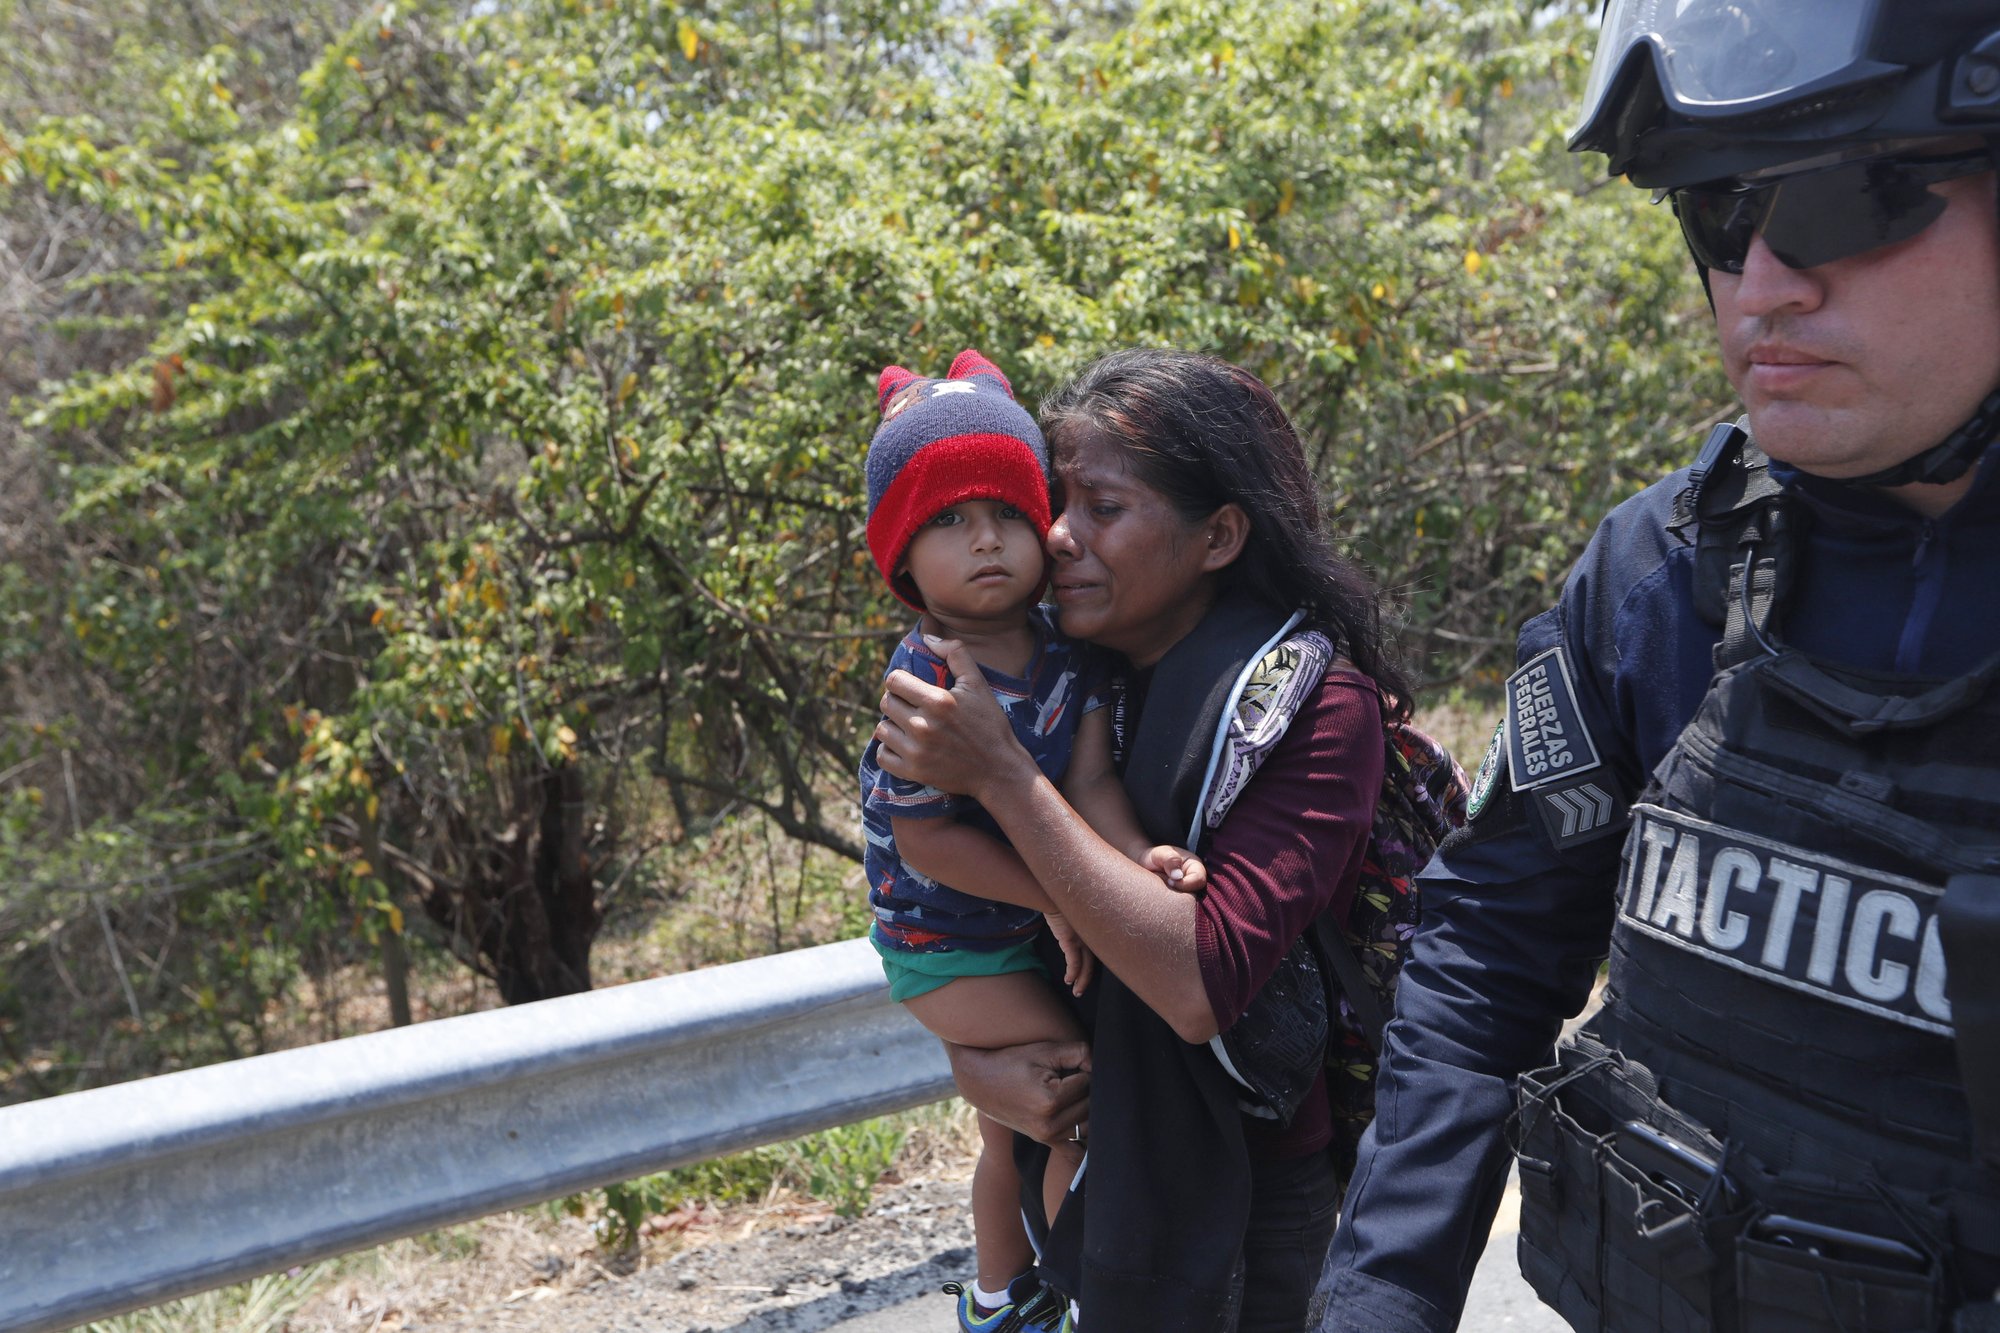 Mexico begins detaining central American migrants in caravans